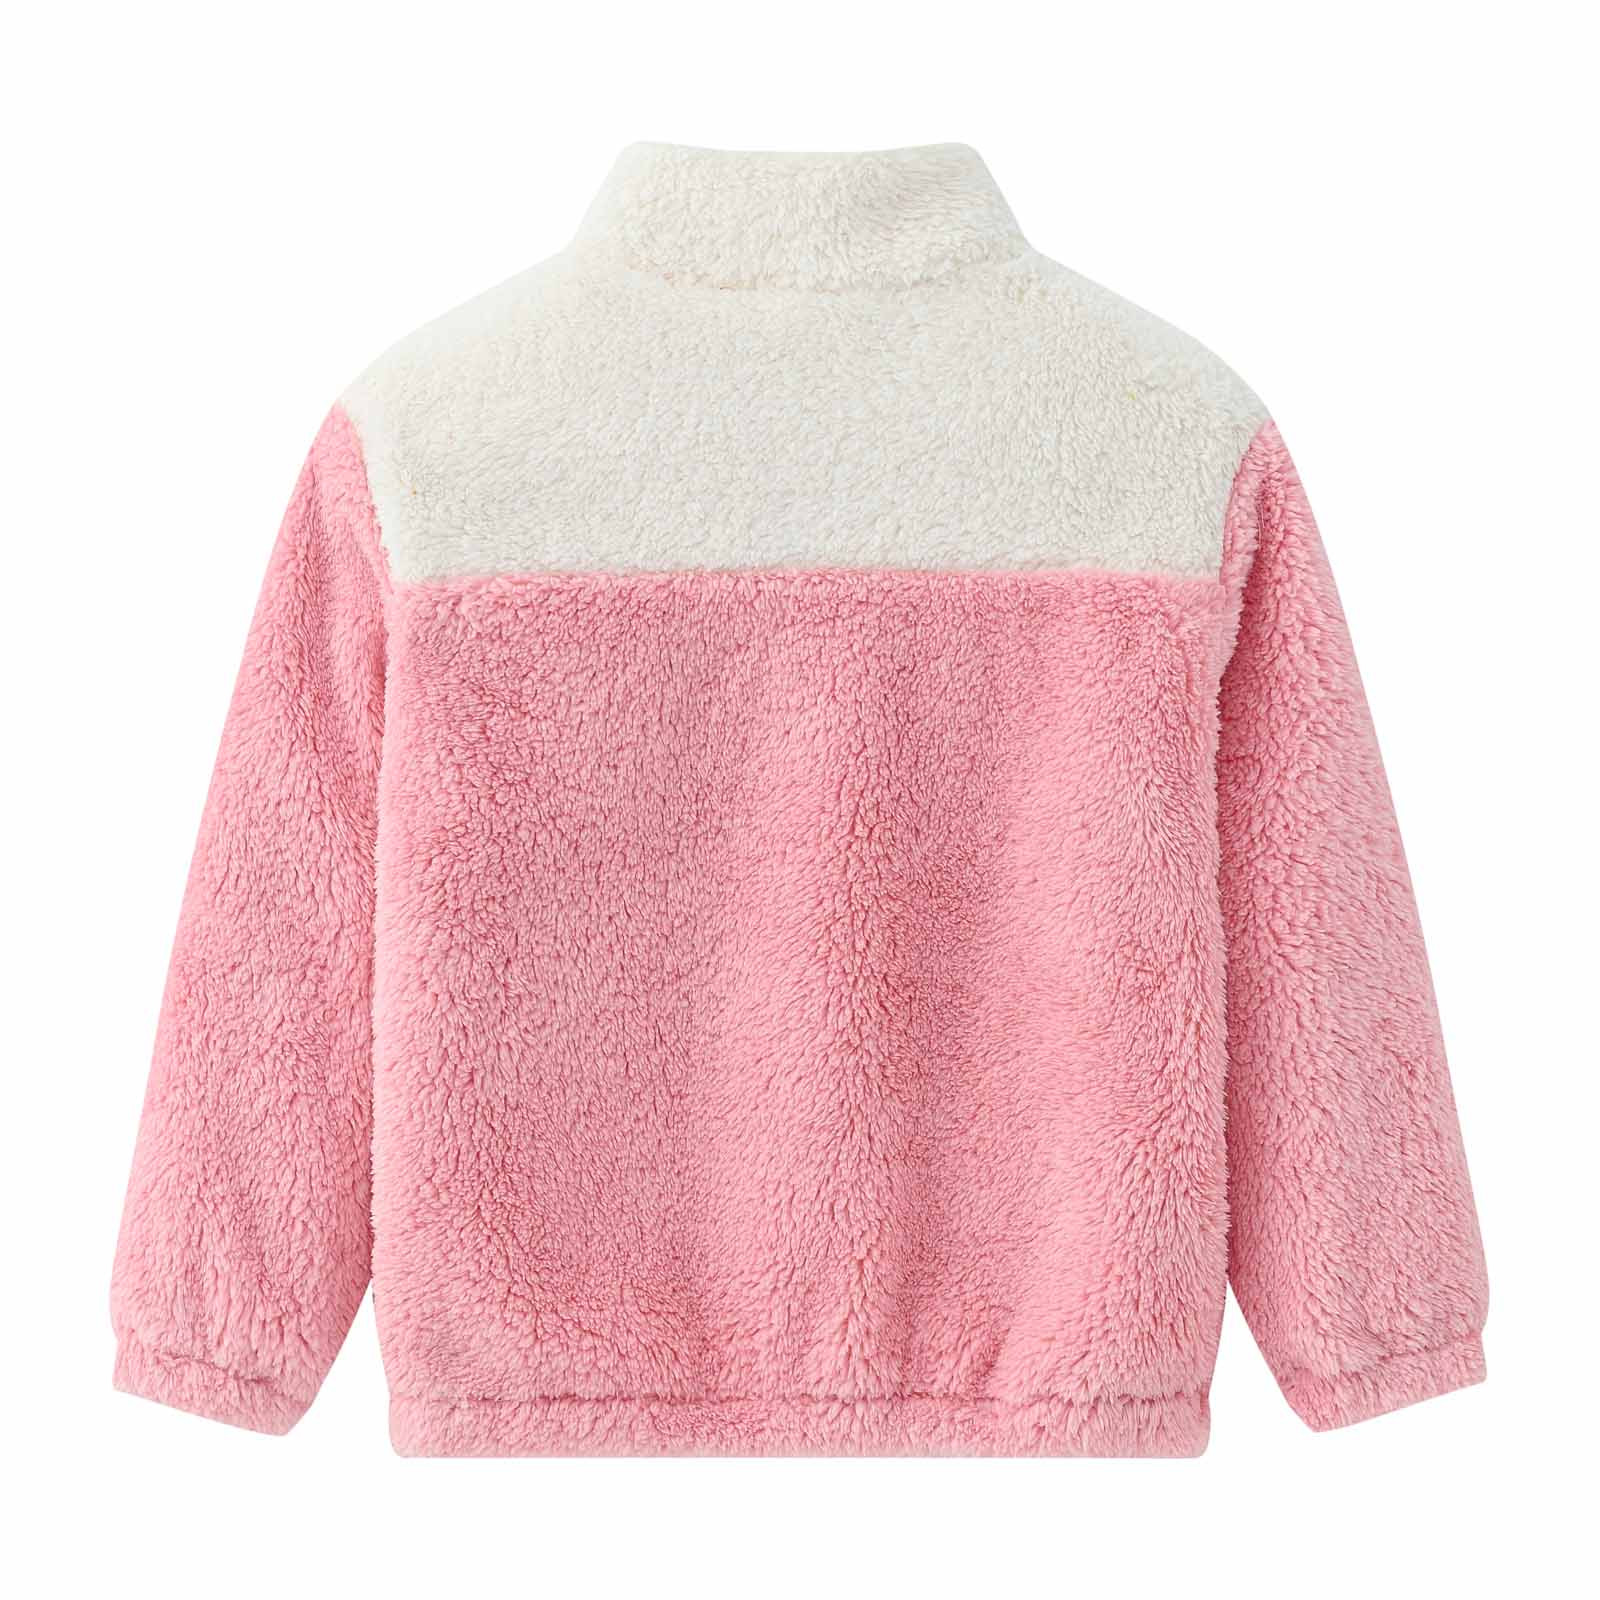 YYDGH Girls Zipper Jacket Fuzzy Sweatshirt Long Sleeve Casual Cozy Fleece Sherpa Outwear Coat Full-Zip Rainbow Jackets(Pink,7-8 Years) - image 5 of 8